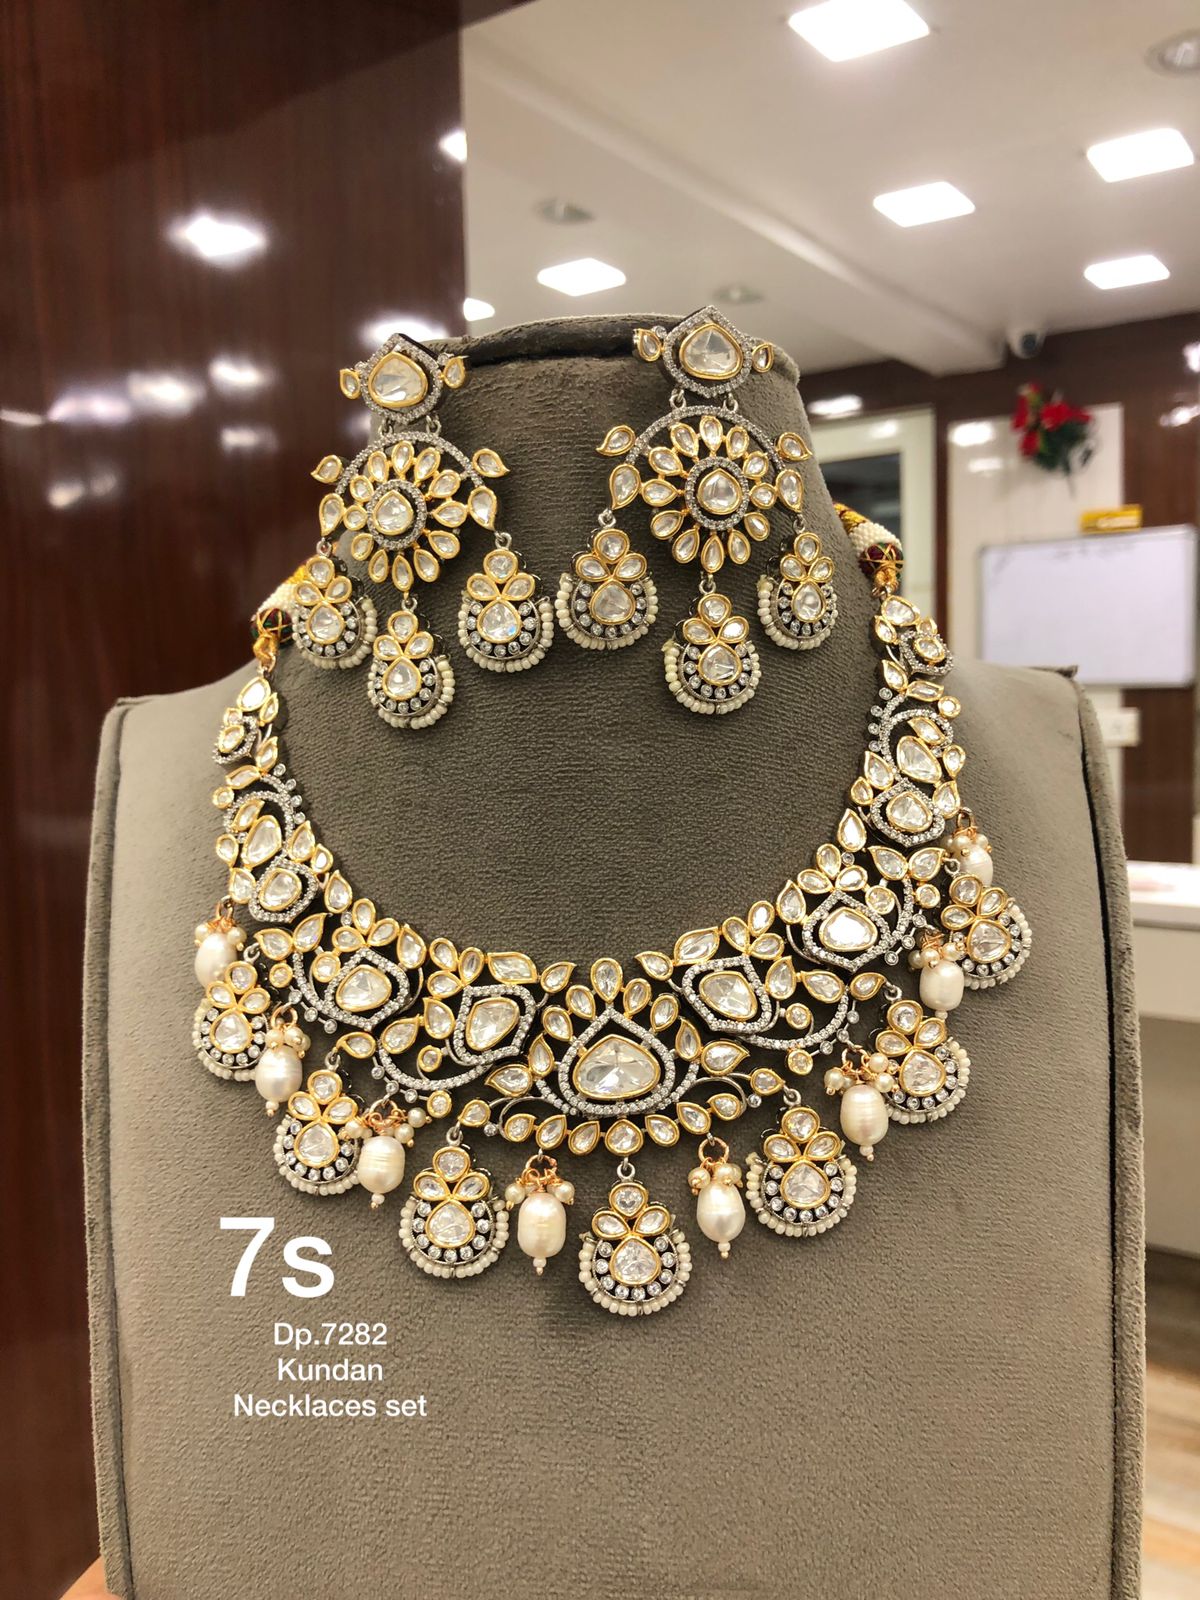 Regal Splendor: Victoria Pattern Kundan Necklace Set with Earrings